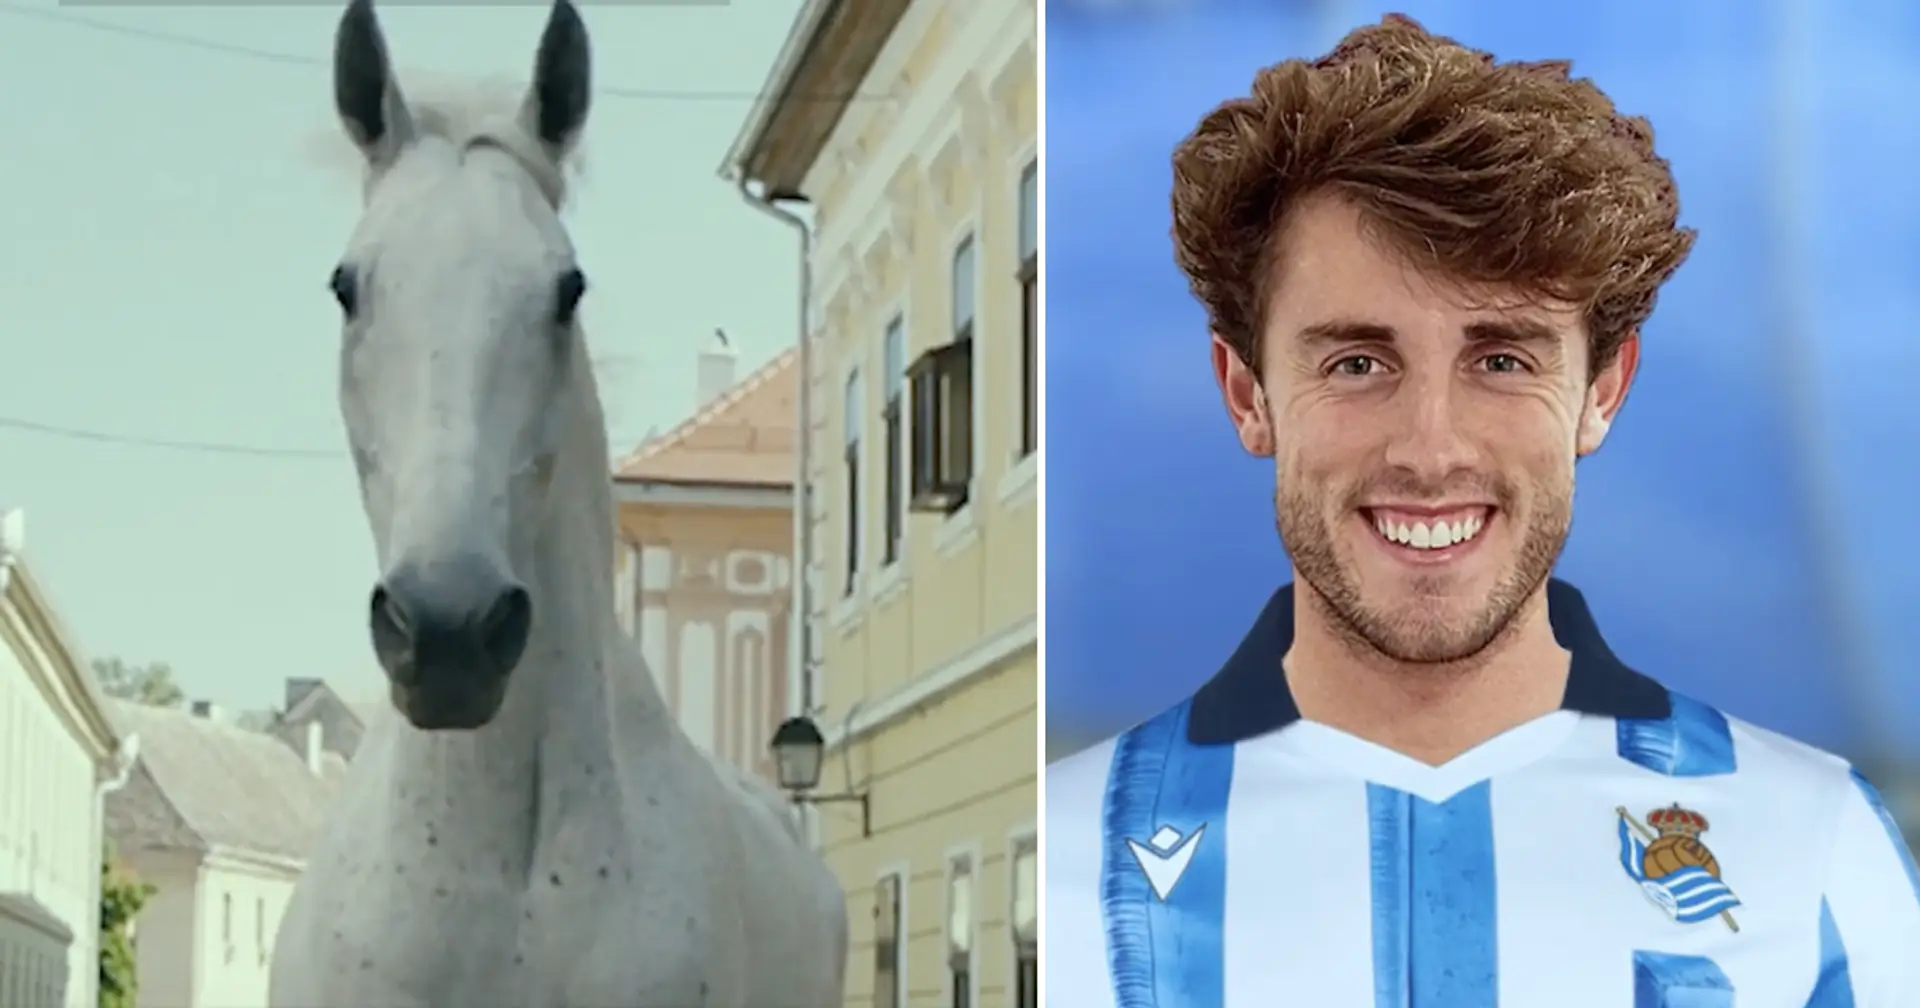 La Real Sociedad annonce la signature d'Odriozola avec une vidéo bizarre de cheval 